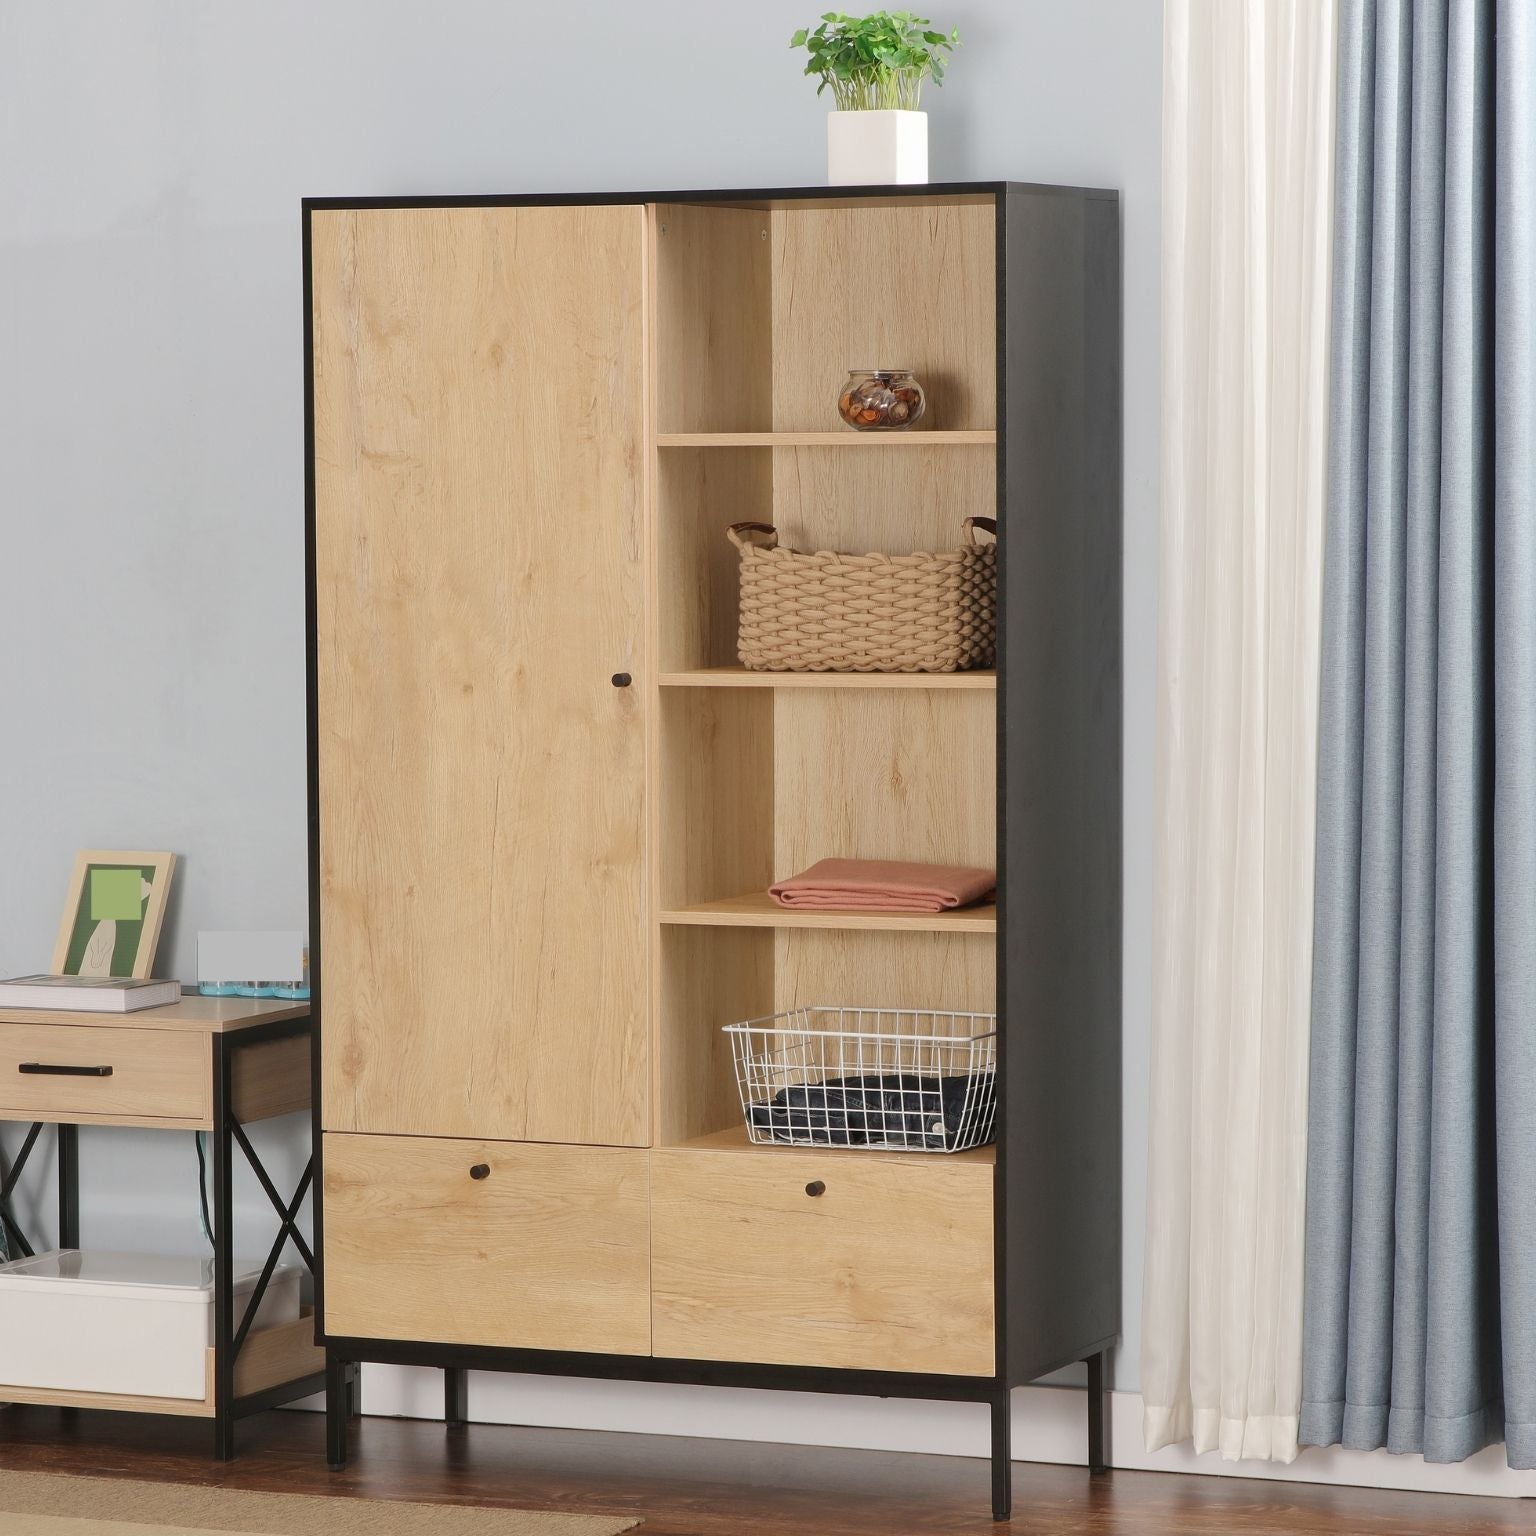 jude armoire wardrobe cabinet and shelf